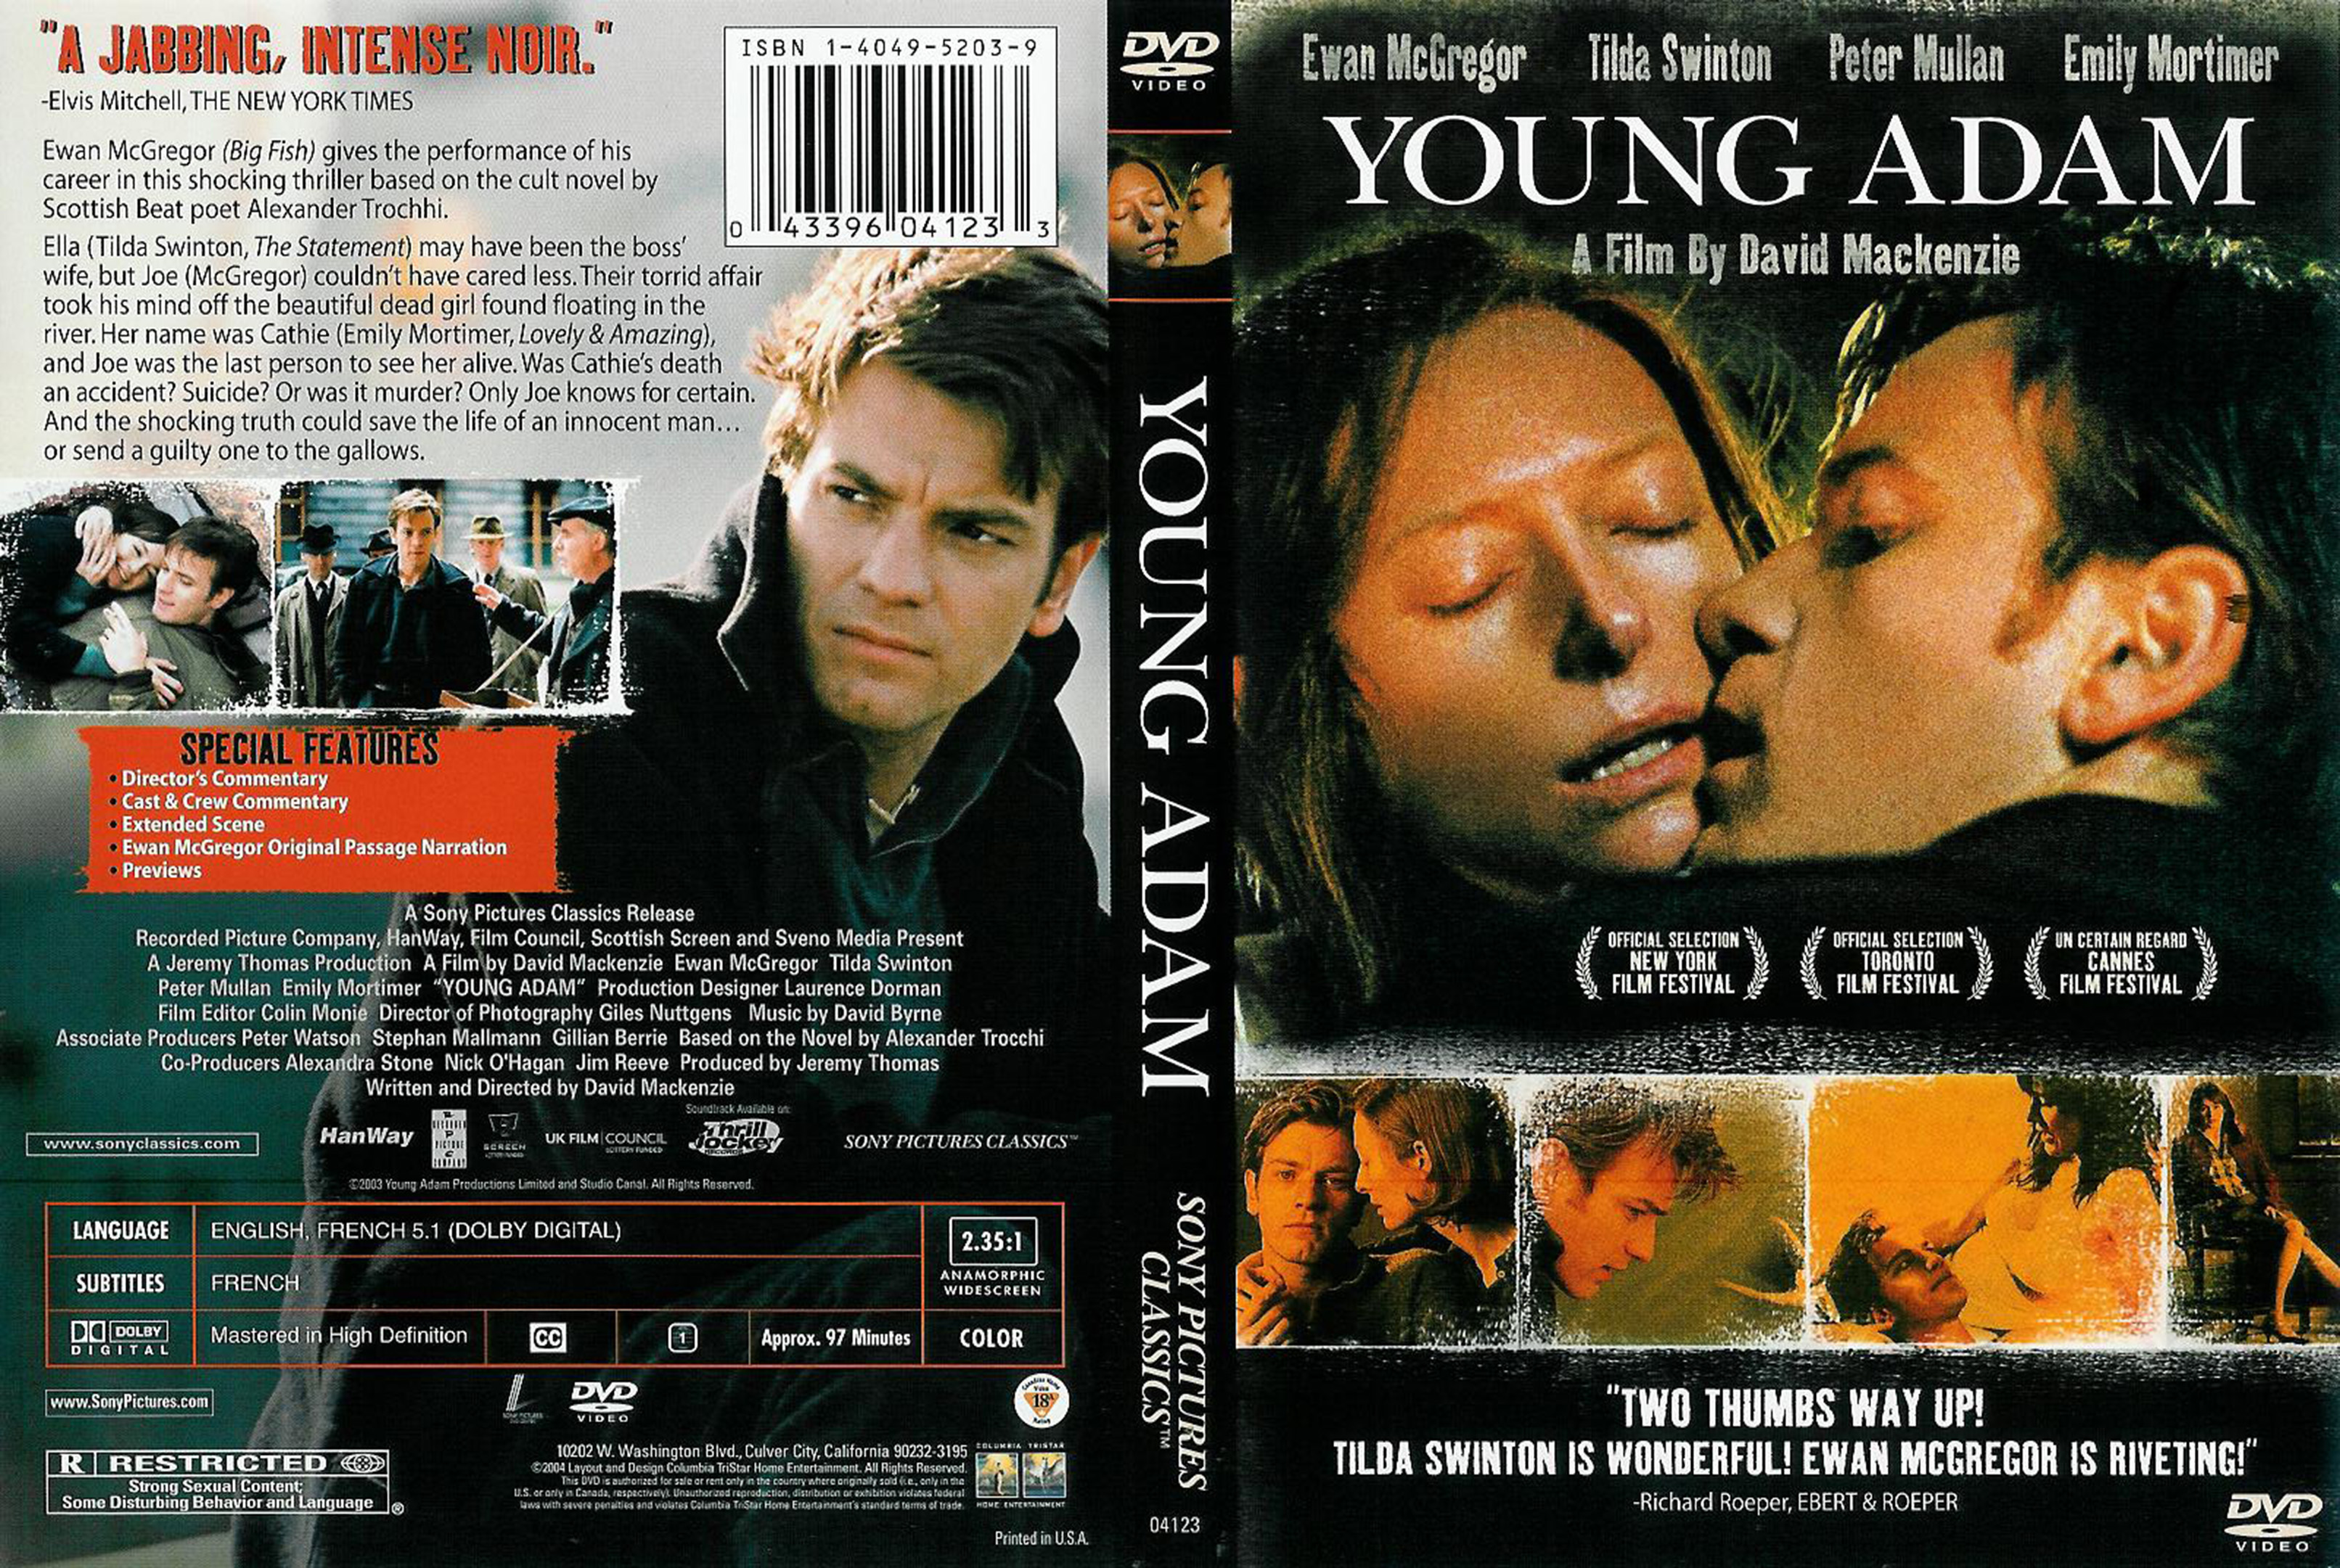 Jaquette DVD Young Adam v2